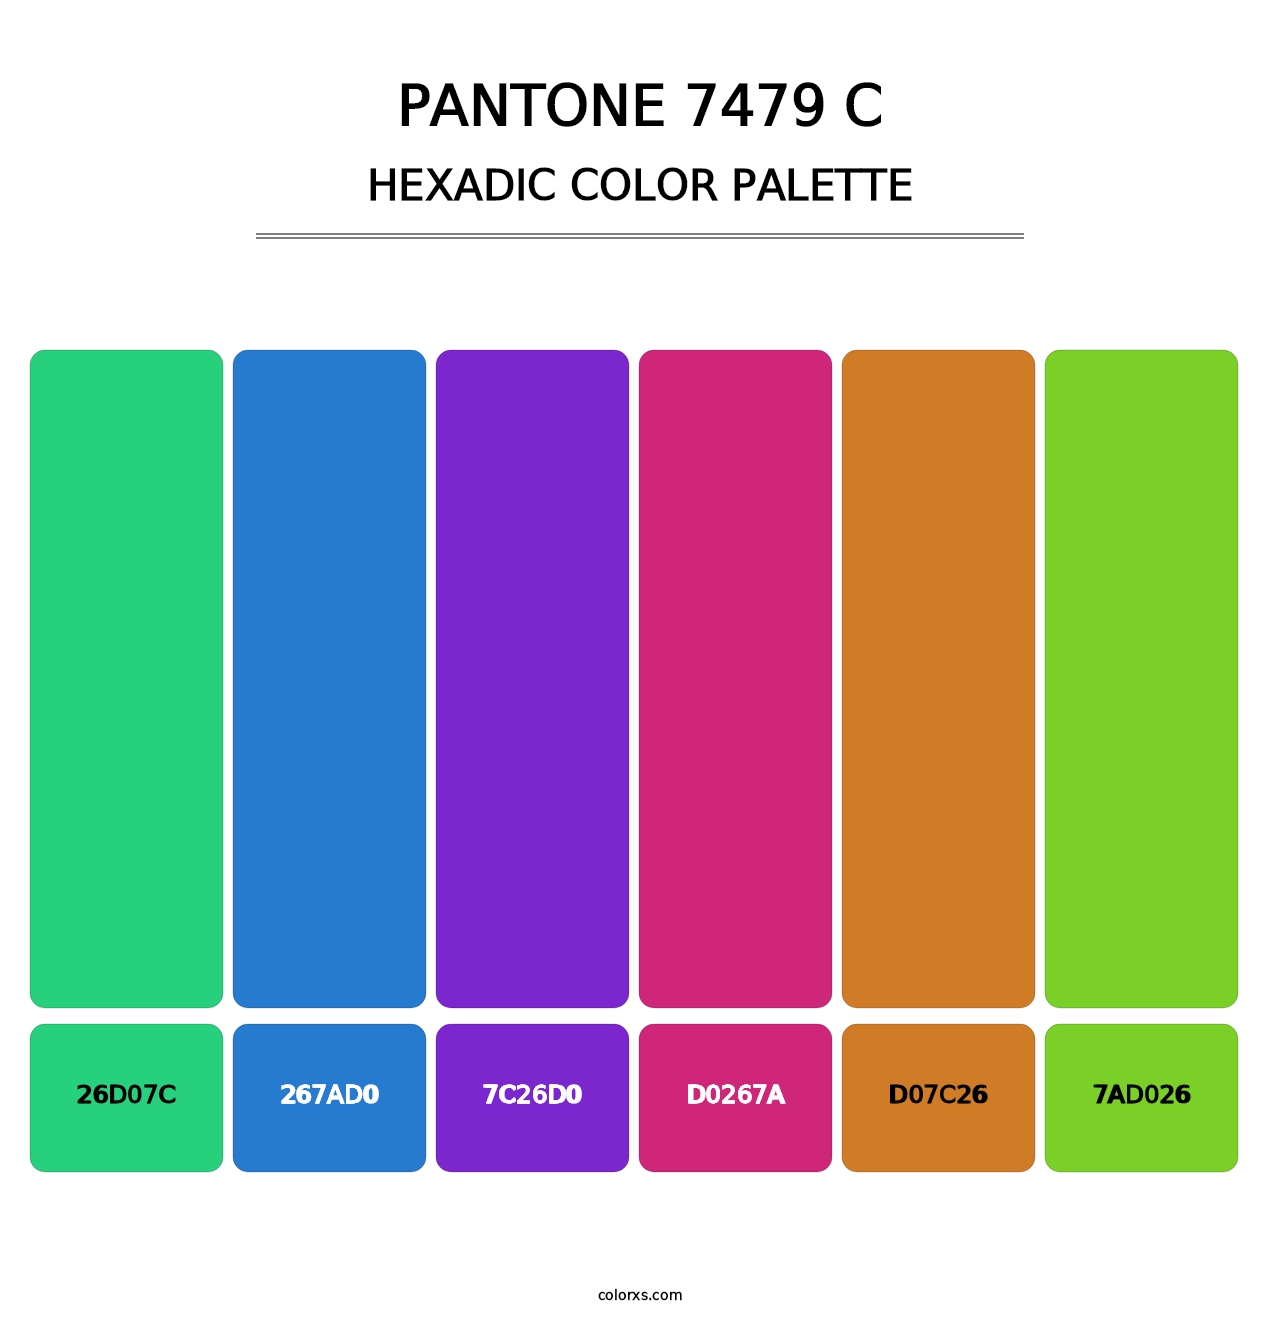 PANTONE 7479 C - Hexadic Color Palette